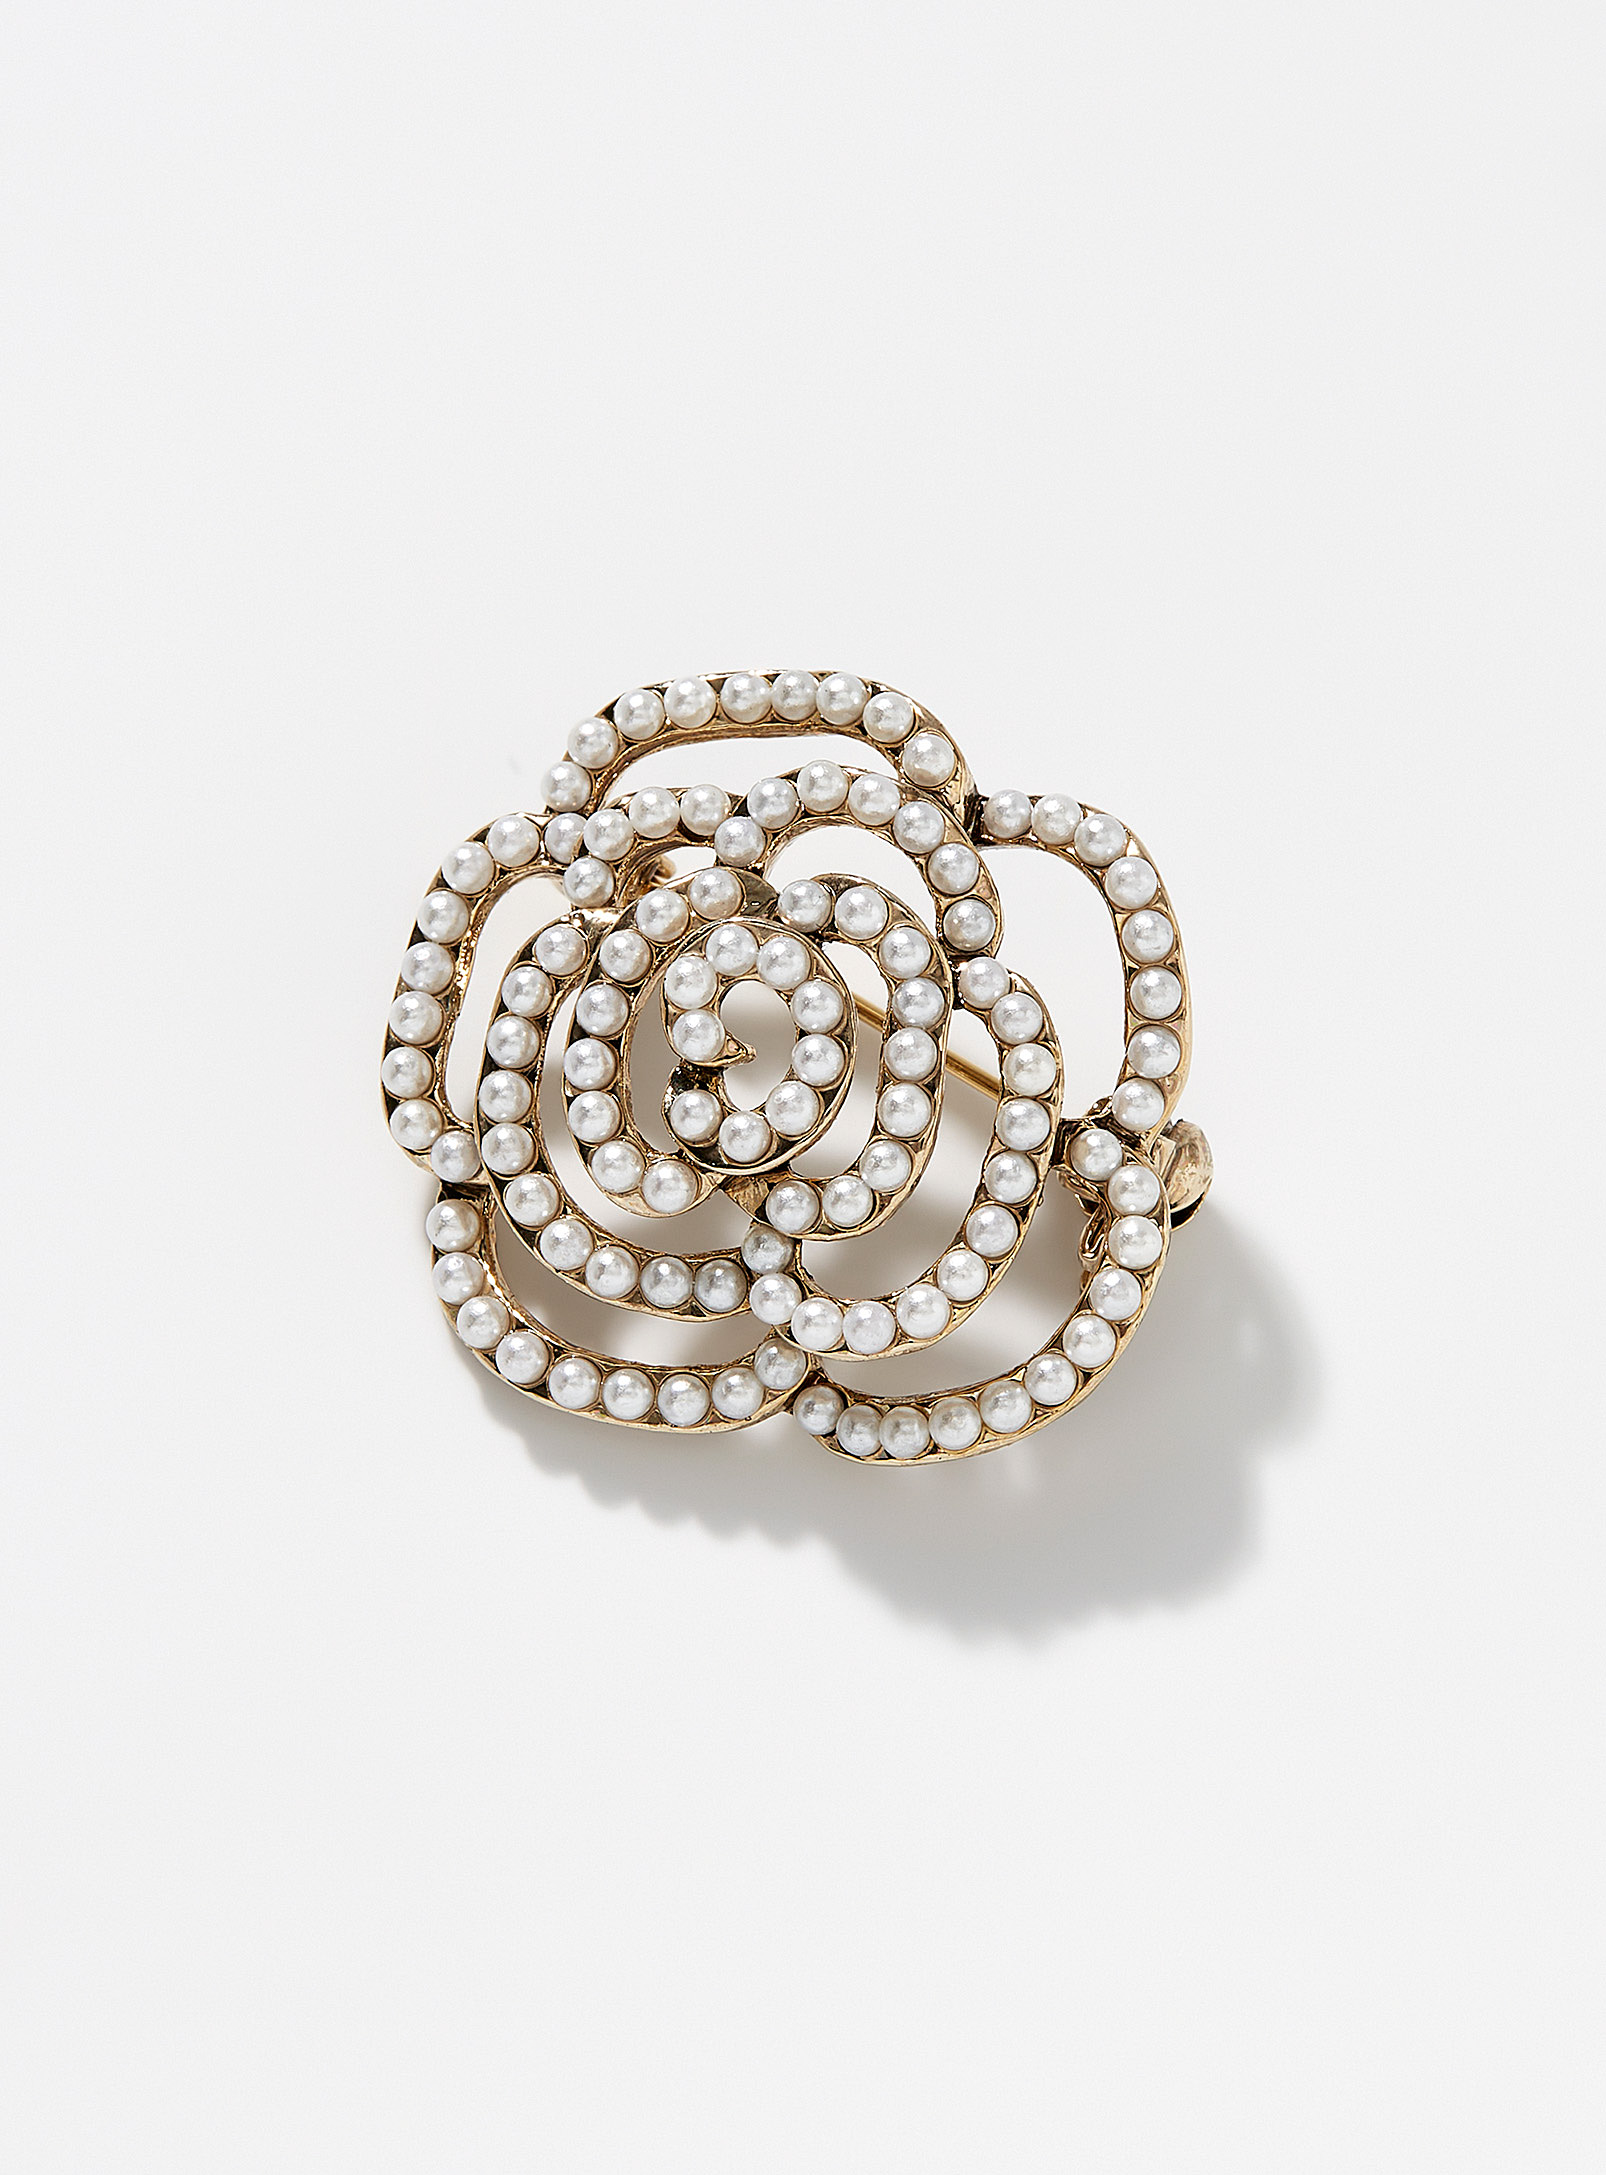 Simons - Women's Pearly bead flower brooch